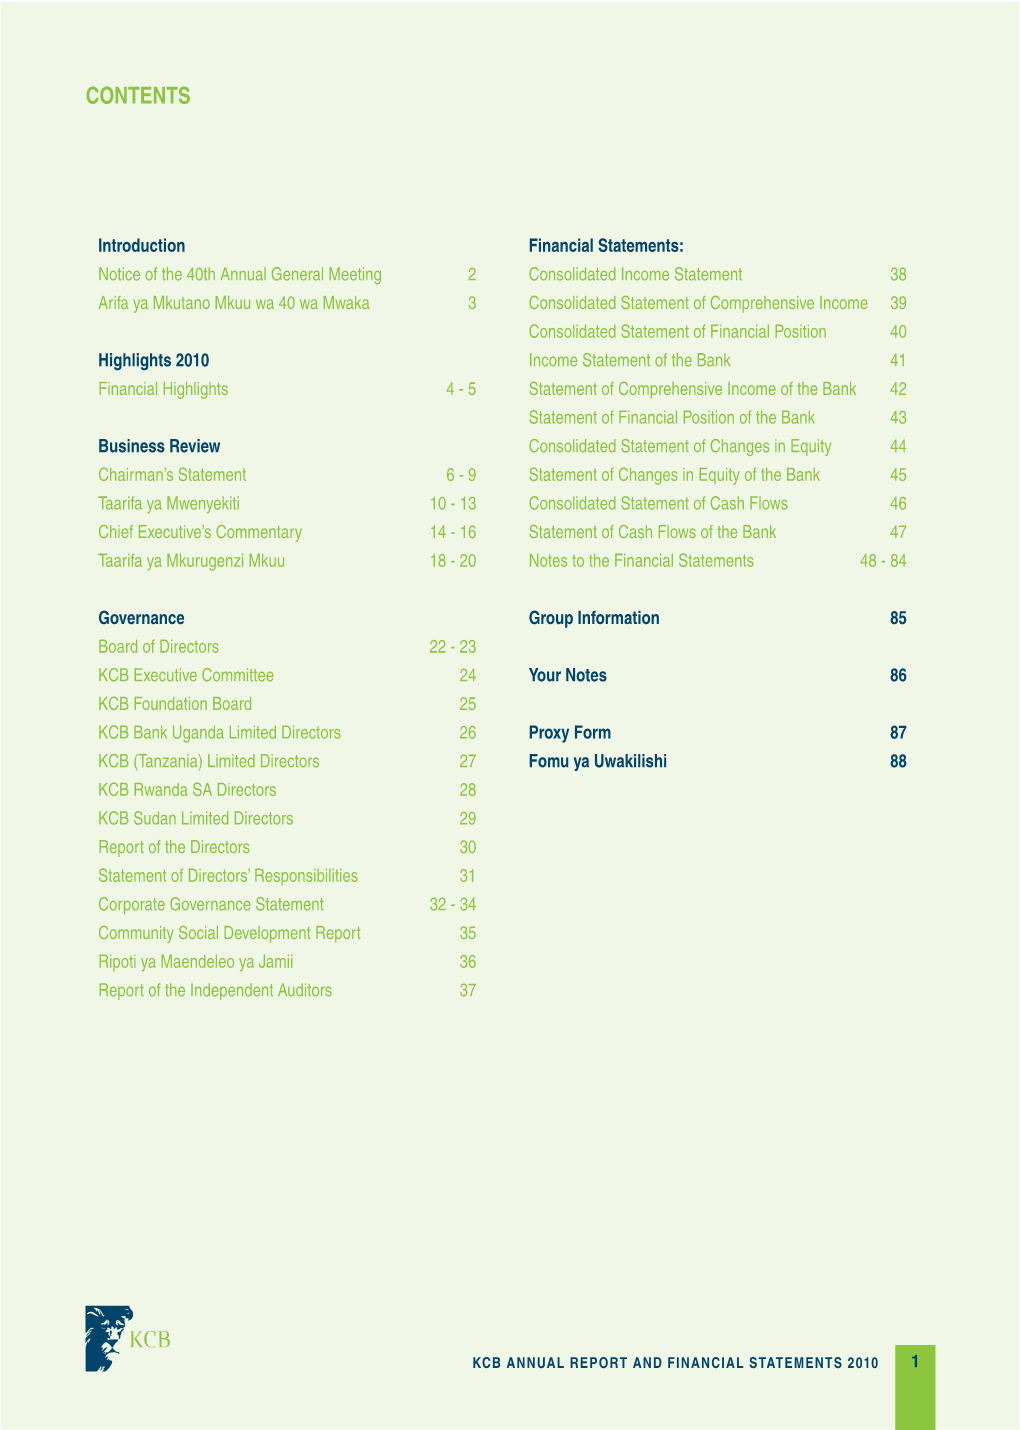 2010 KCB Annual Report